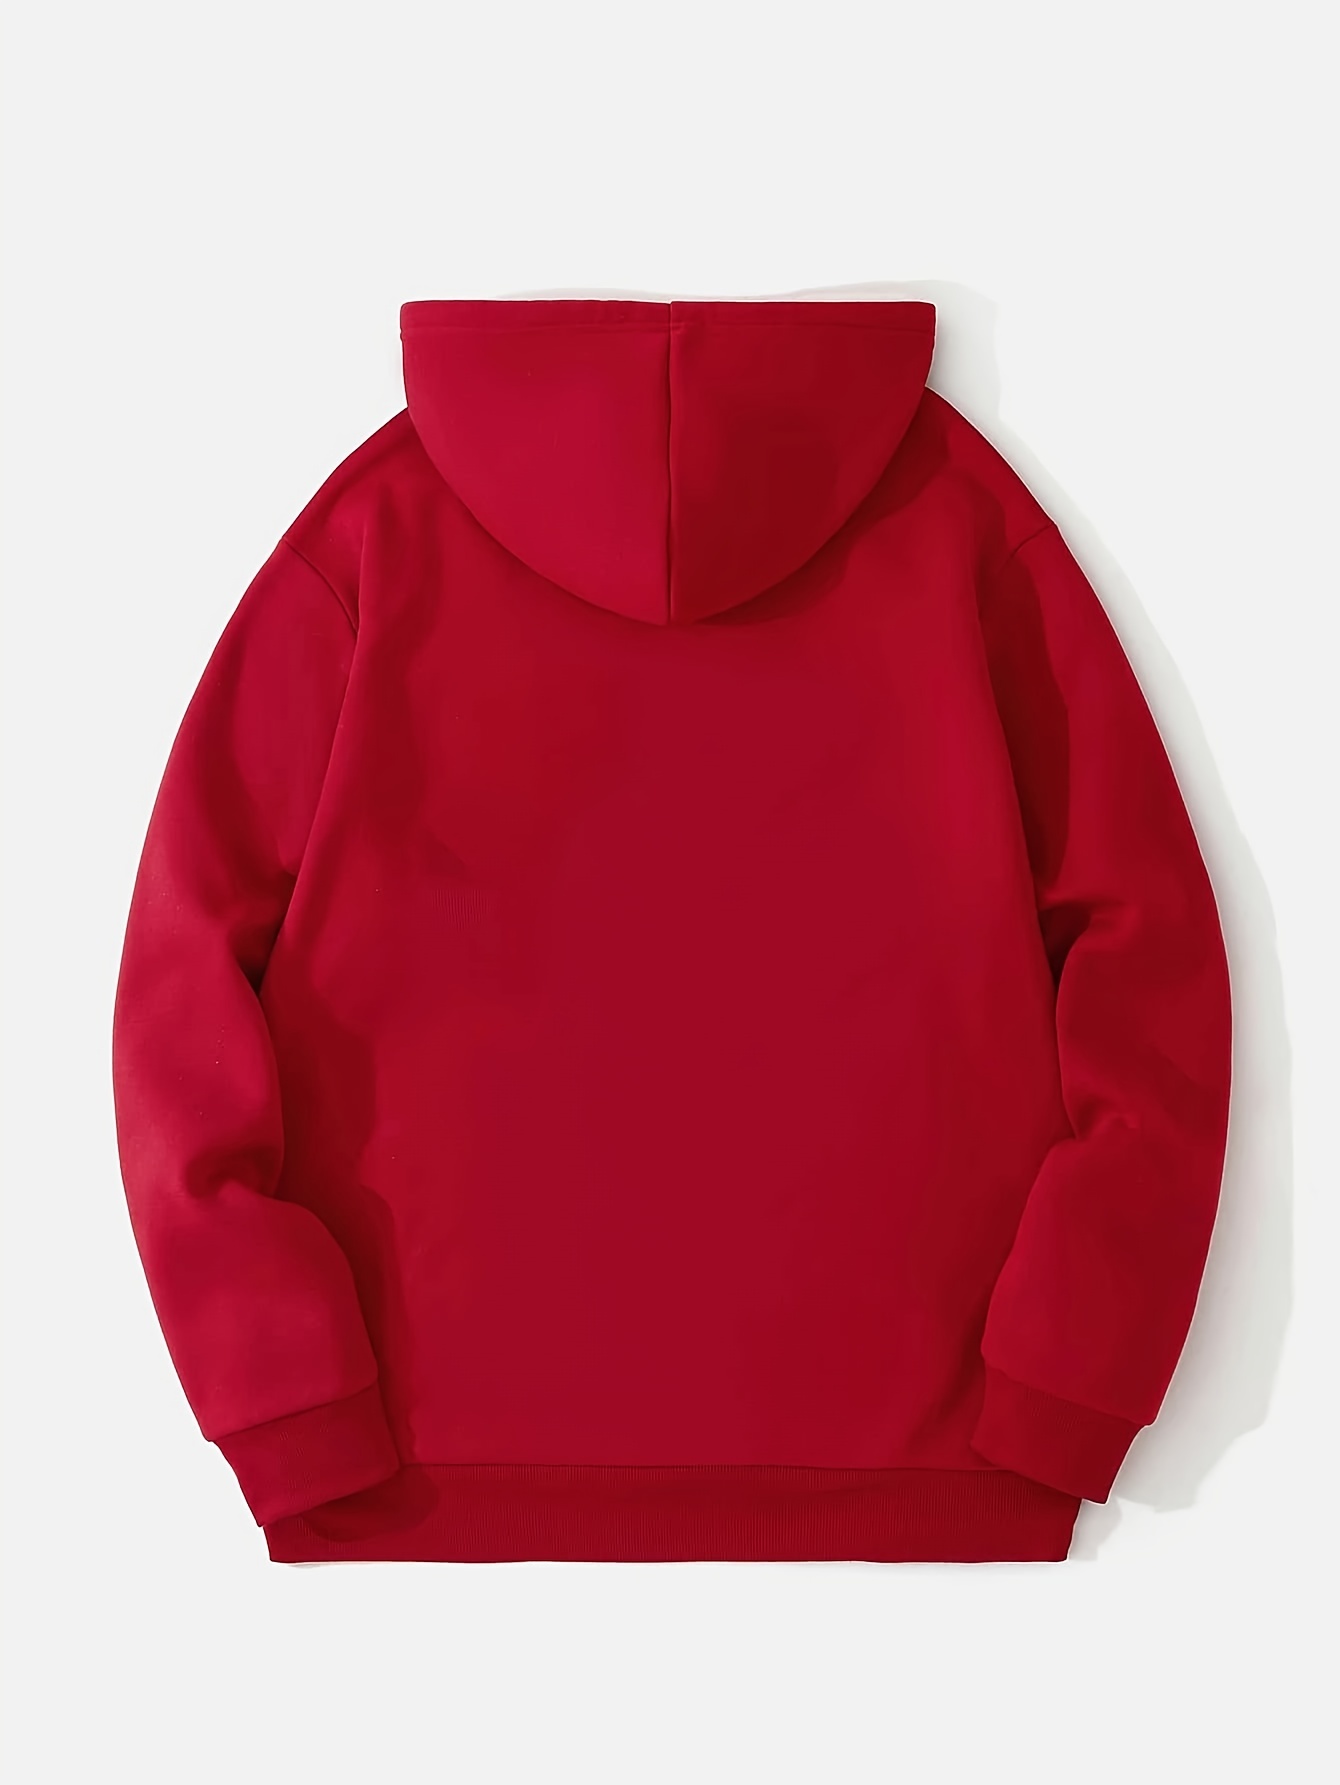 supreme screenprint hoodie - red on cream white XL rare OG